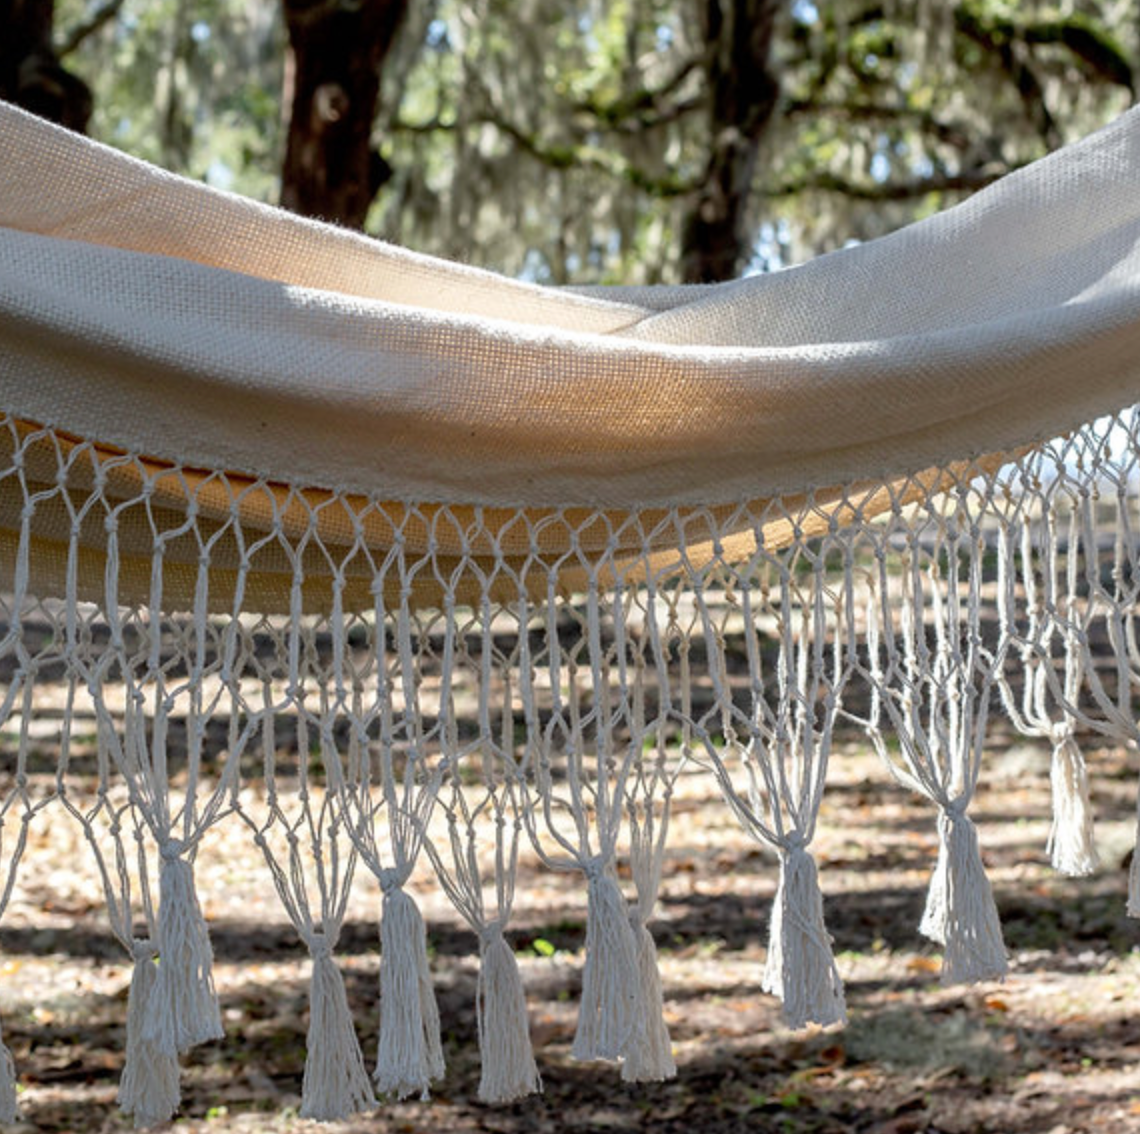 Hand-loomed cotton hammocks from Paraguay